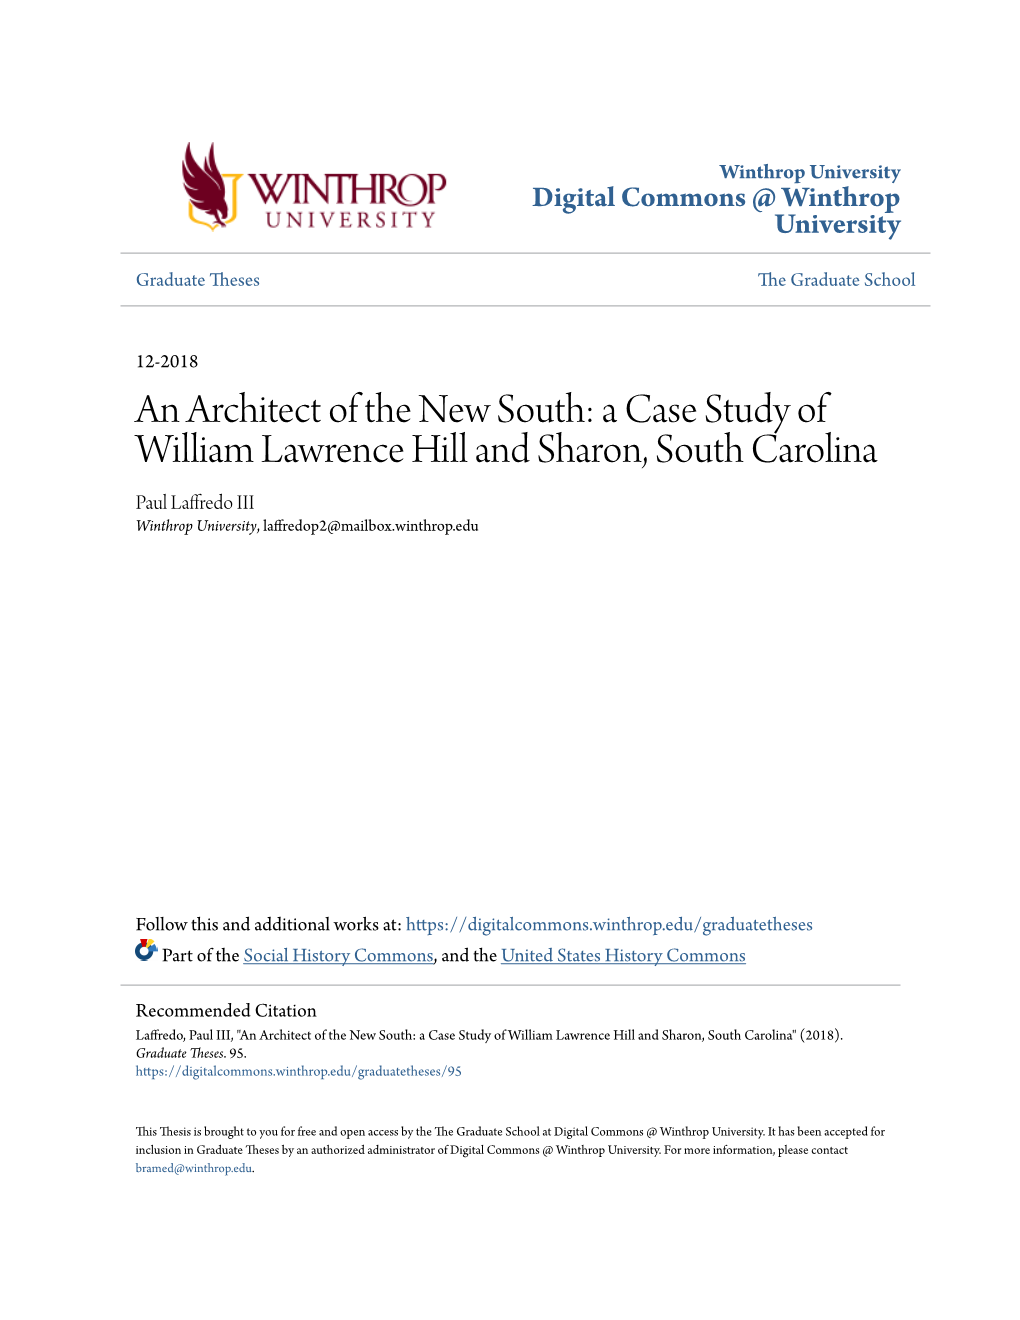 An Architect of the New South: a Case Study of William Lawrence Hill and Sharon, South Carolina Paul Laffredo III Winthrop University, Laffredop2@Mailbox.Winthrop.Edu